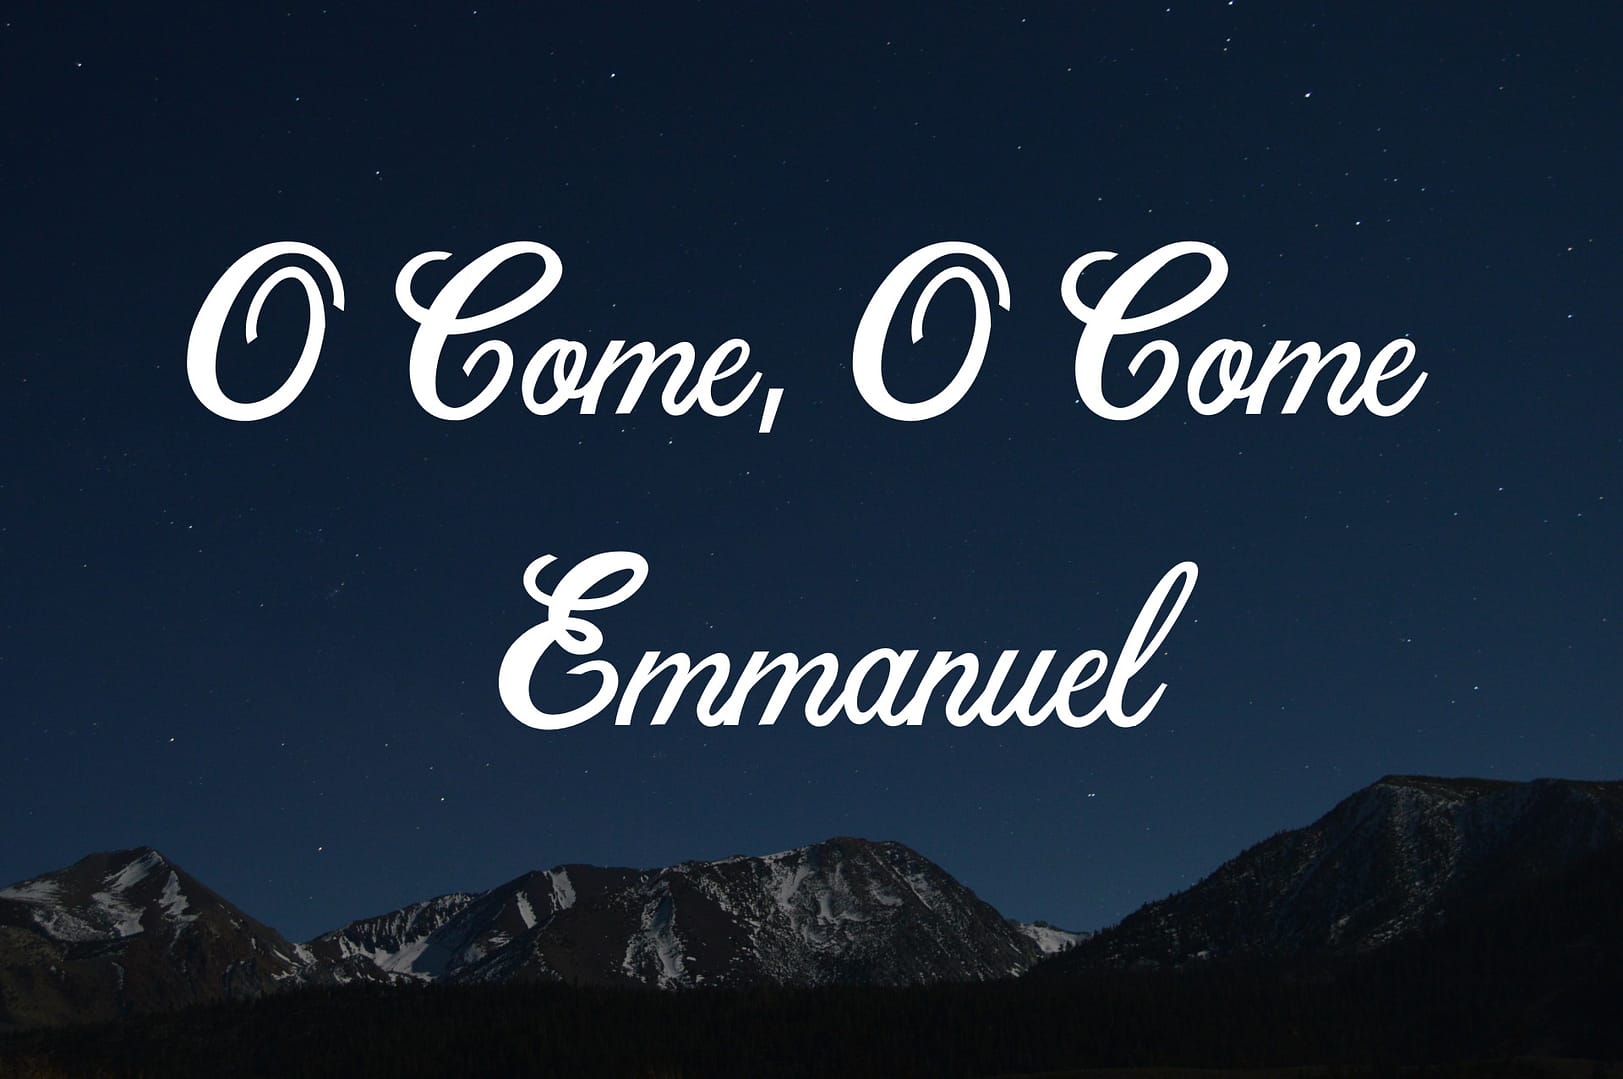 O Come, O Come Emmanuel: Meaning